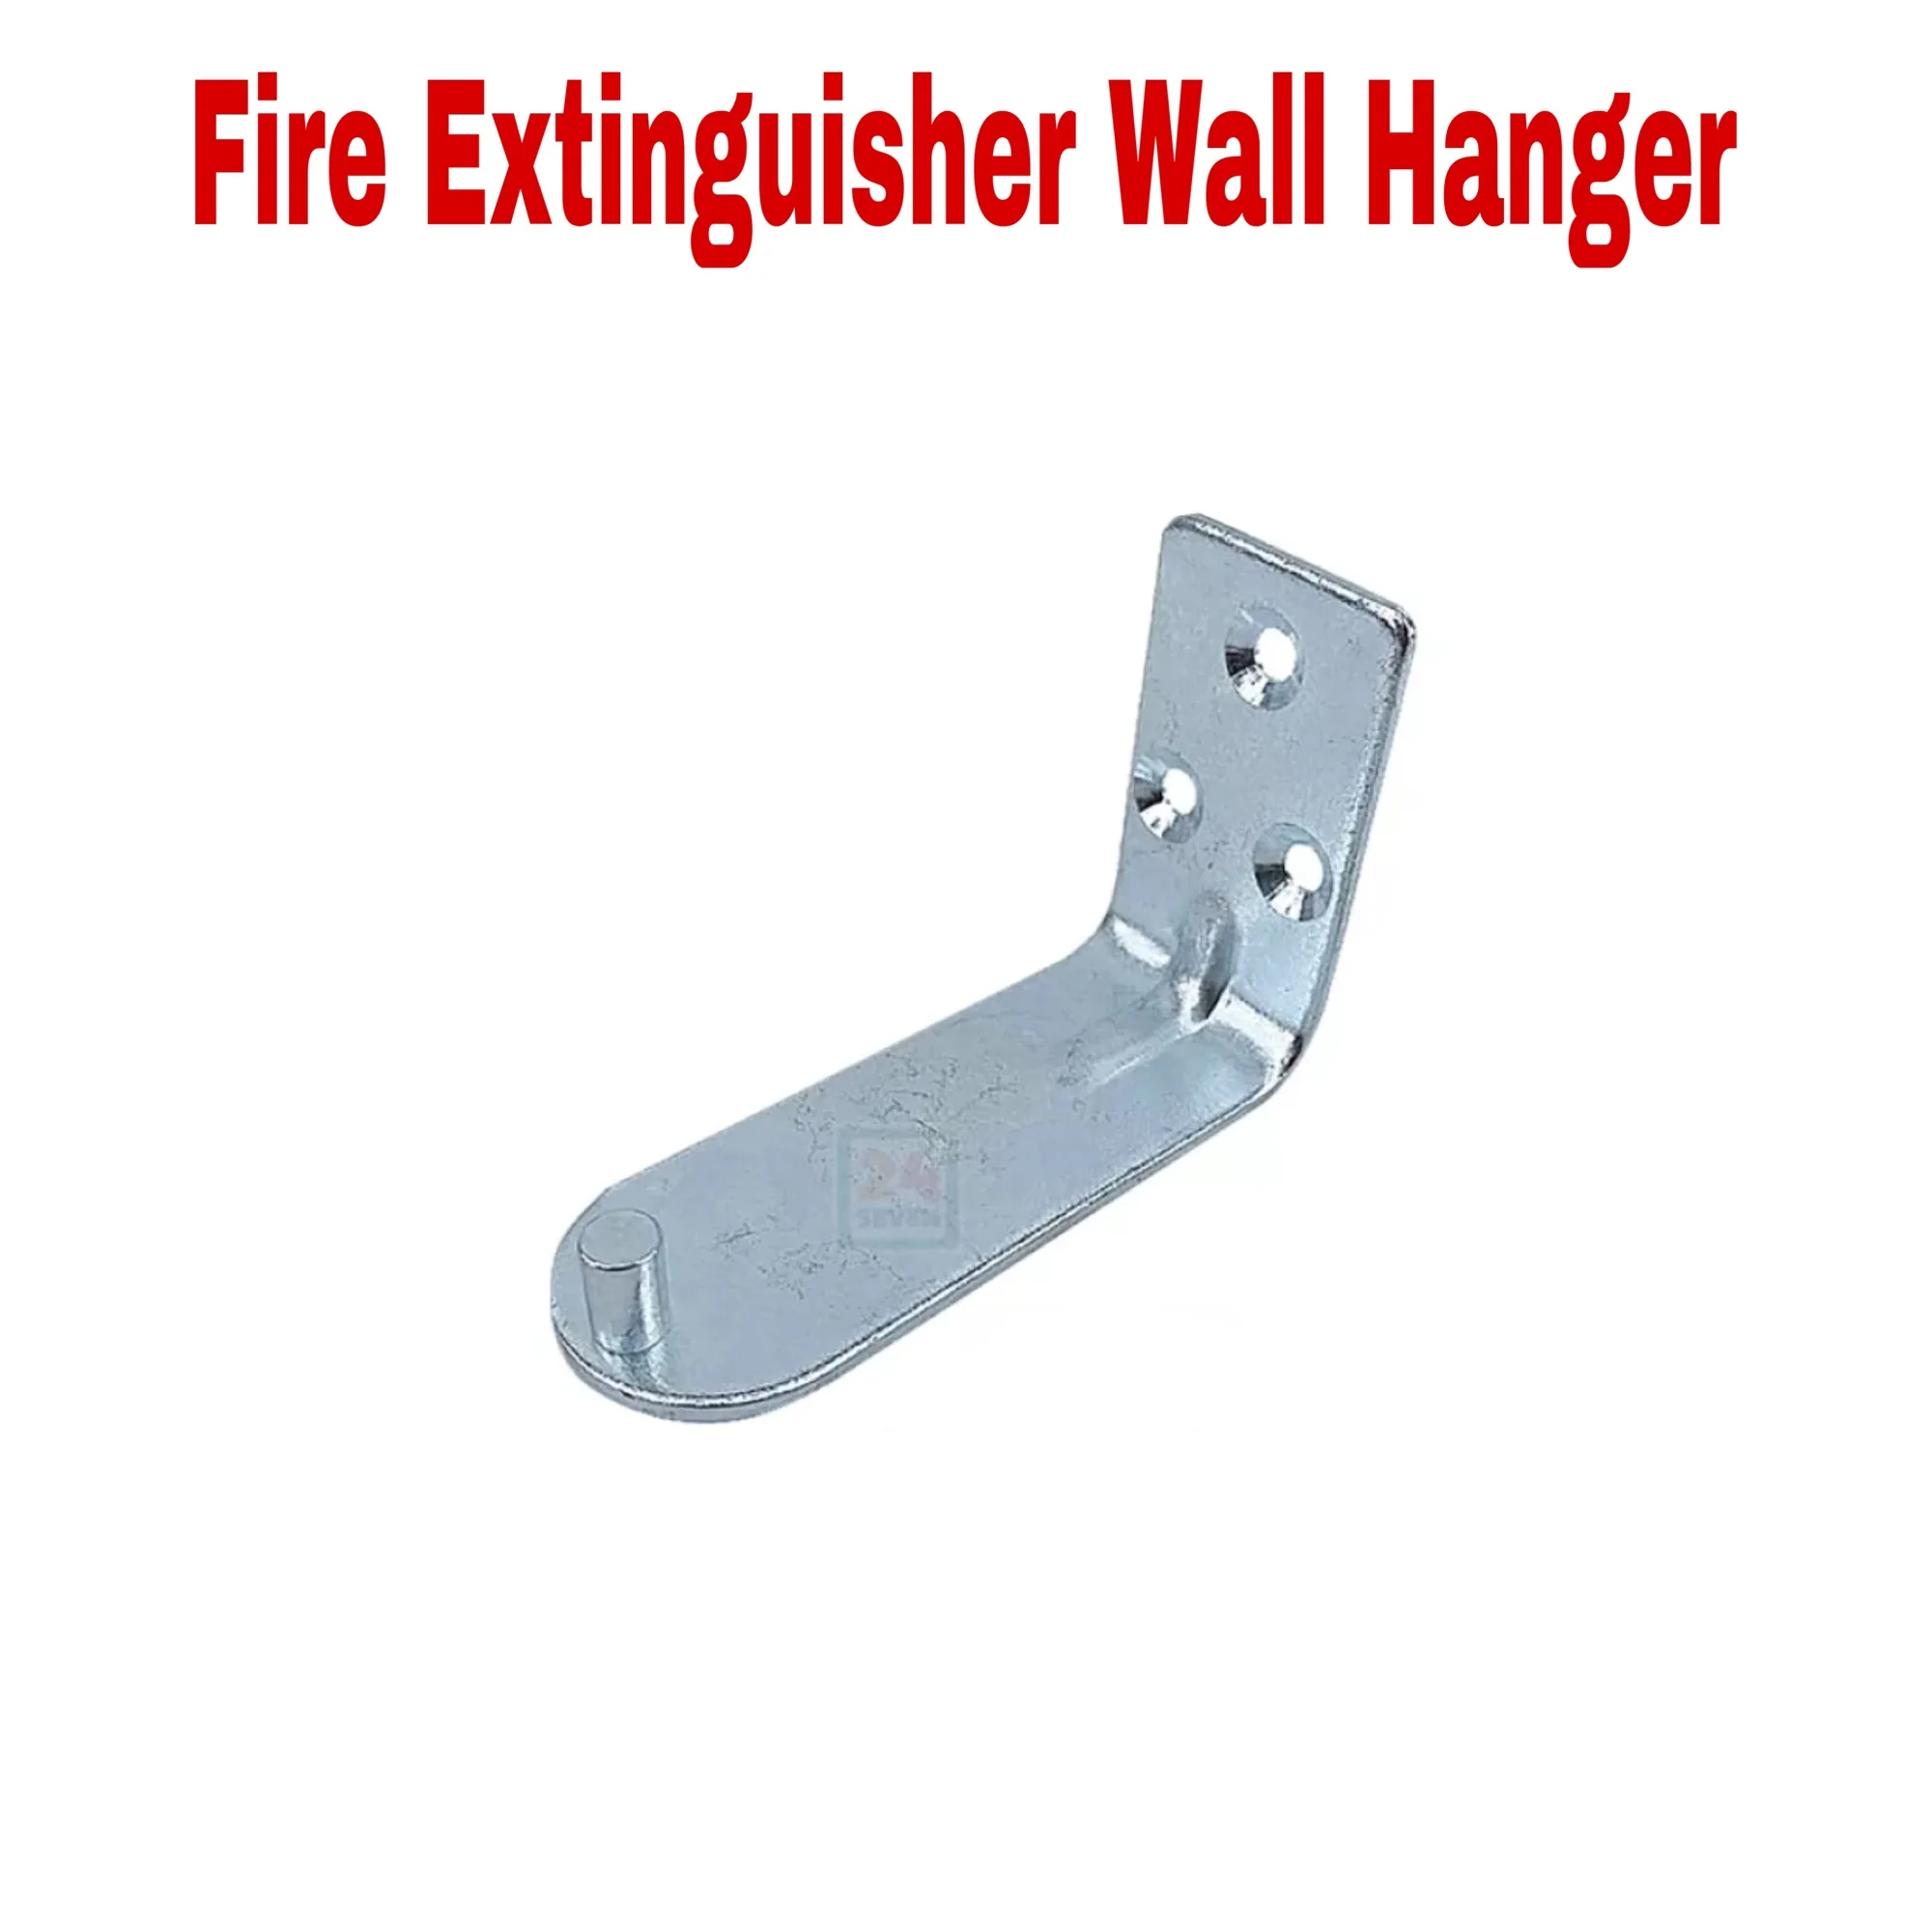 Fire Extinguisher Wall Hanger